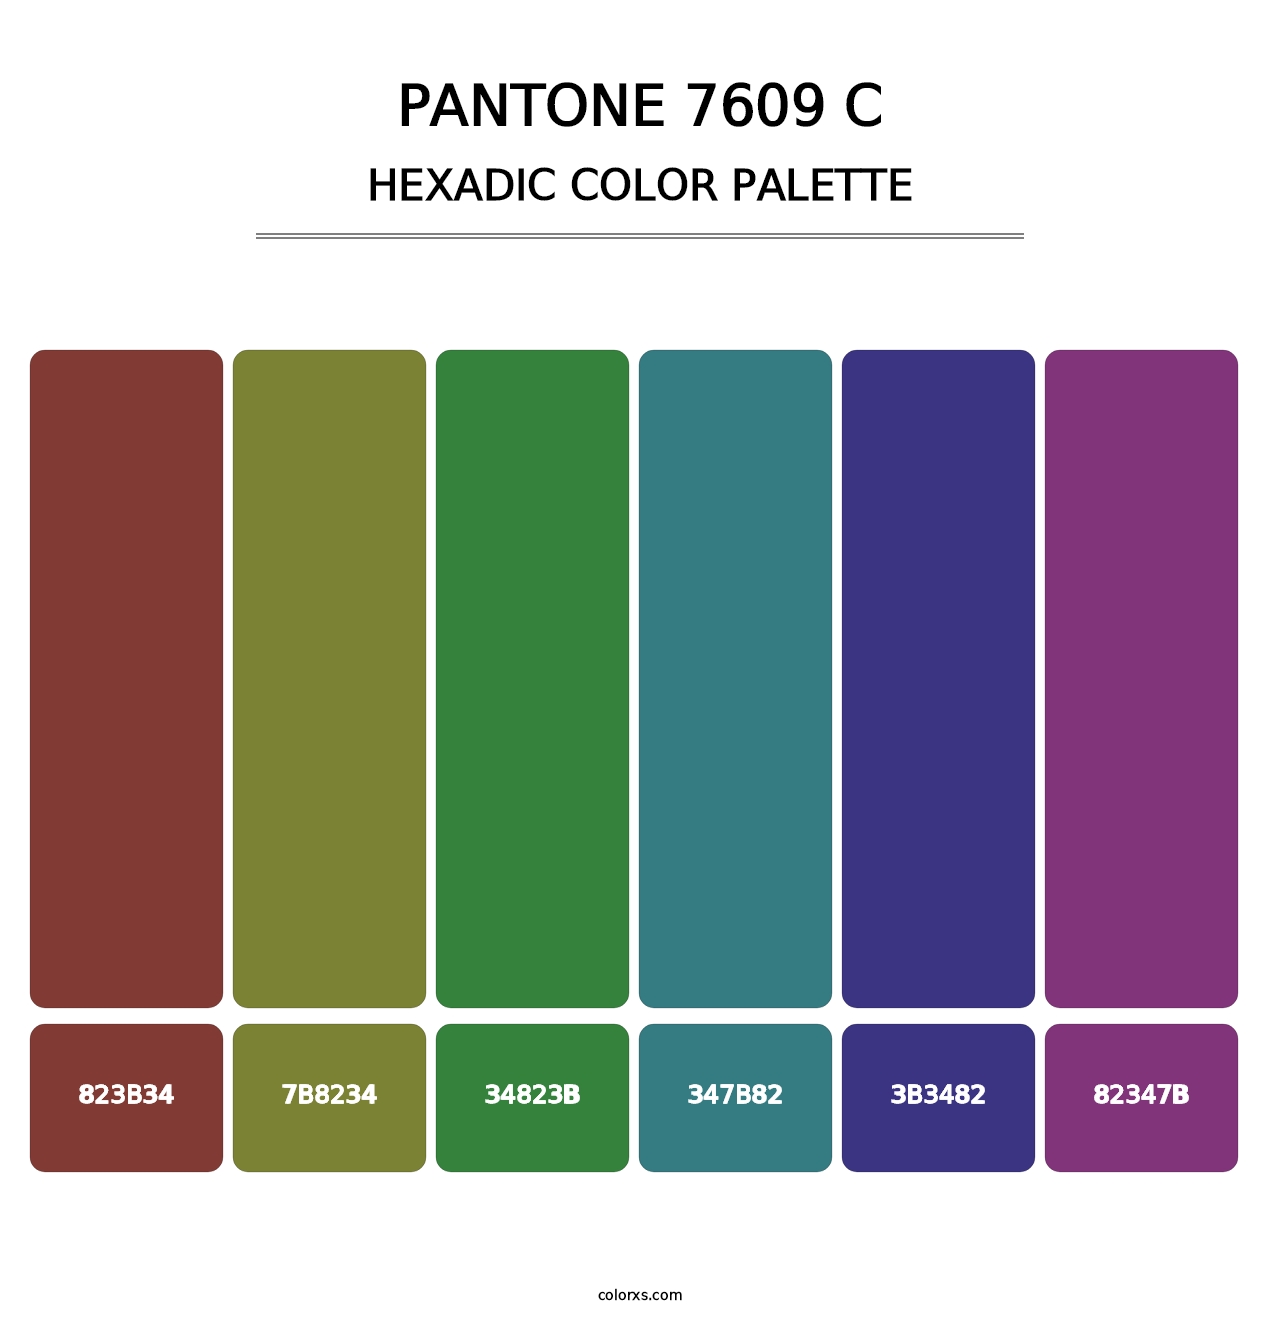 PANTONE 7609 C - Hexadic Color Palette